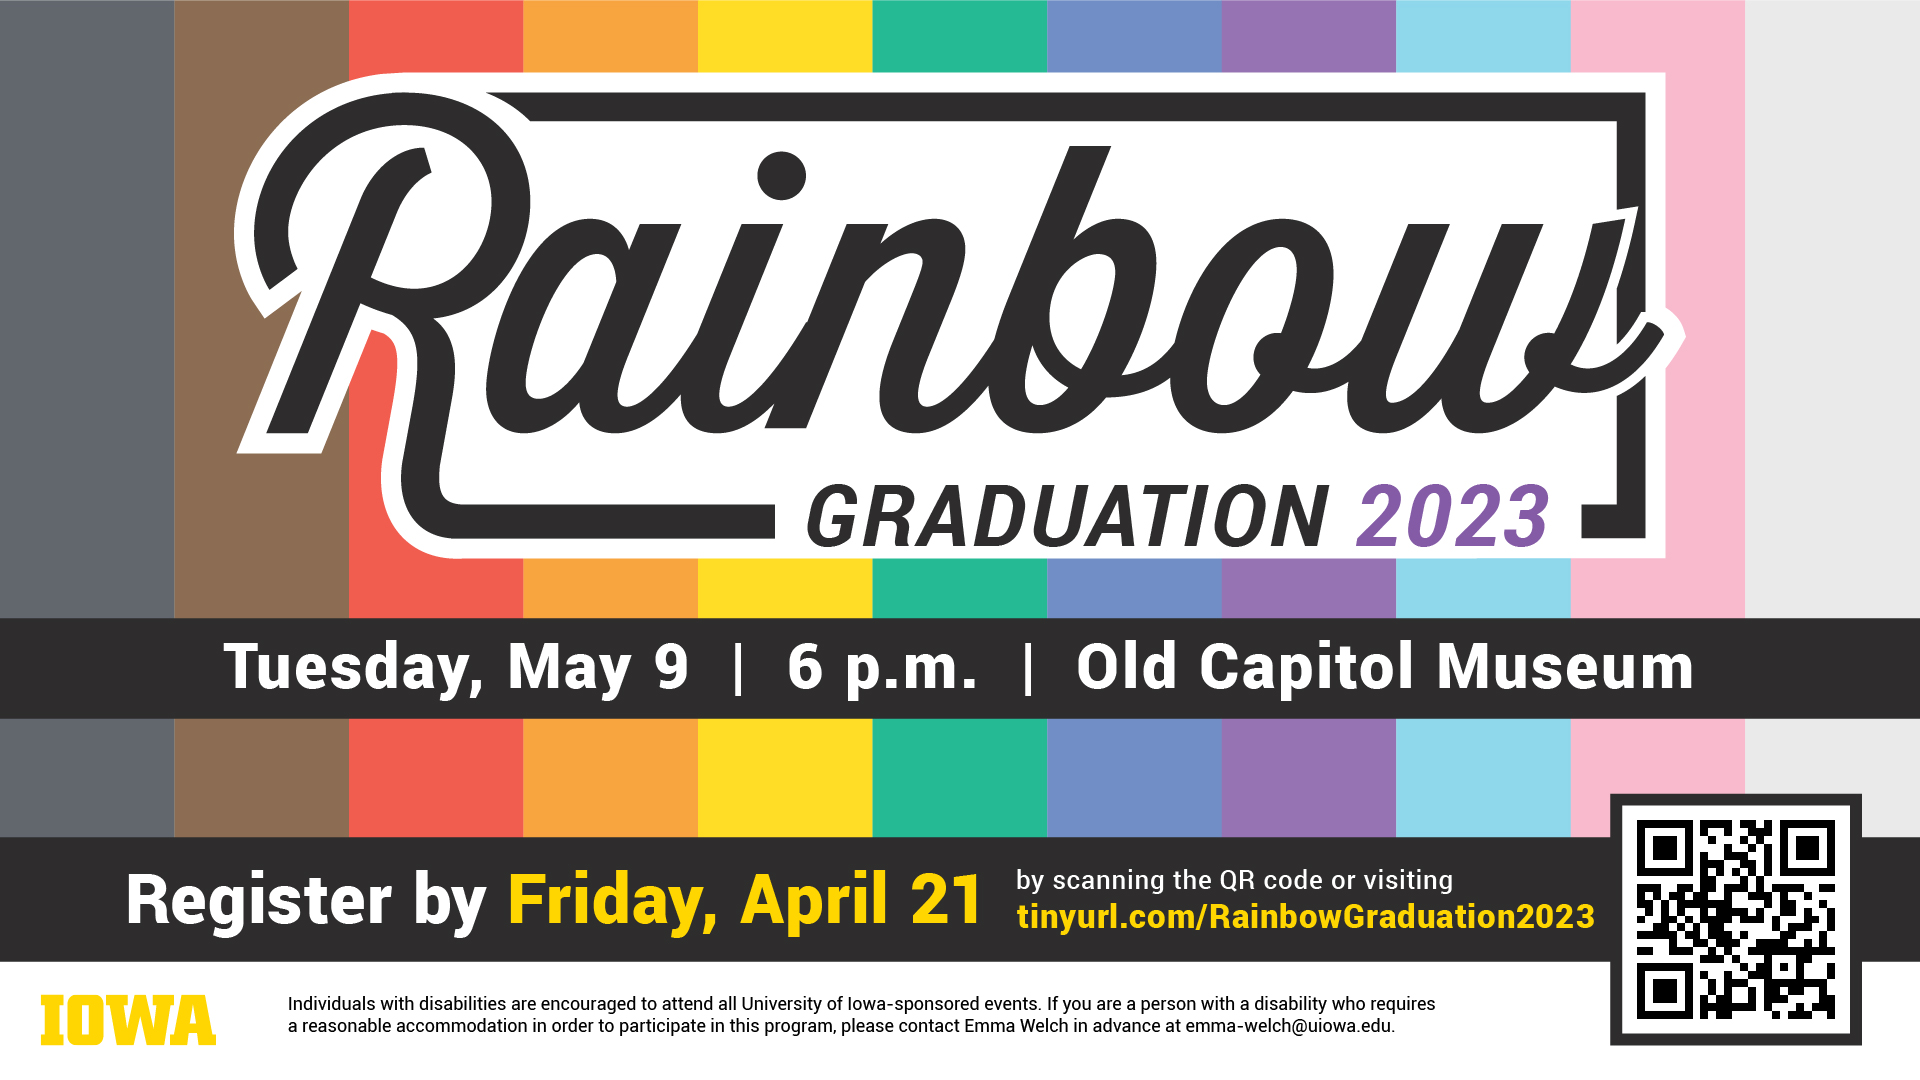 Rainbow graduation. Register by 4/21